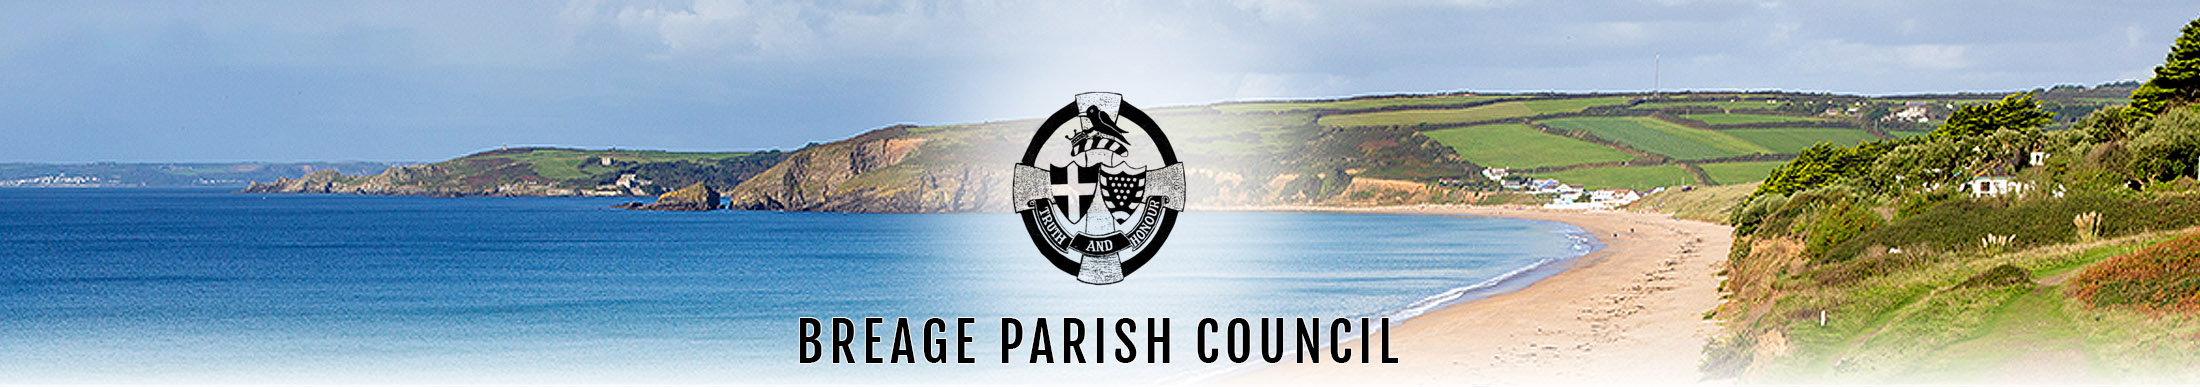 Header Image for Breage Parish Council